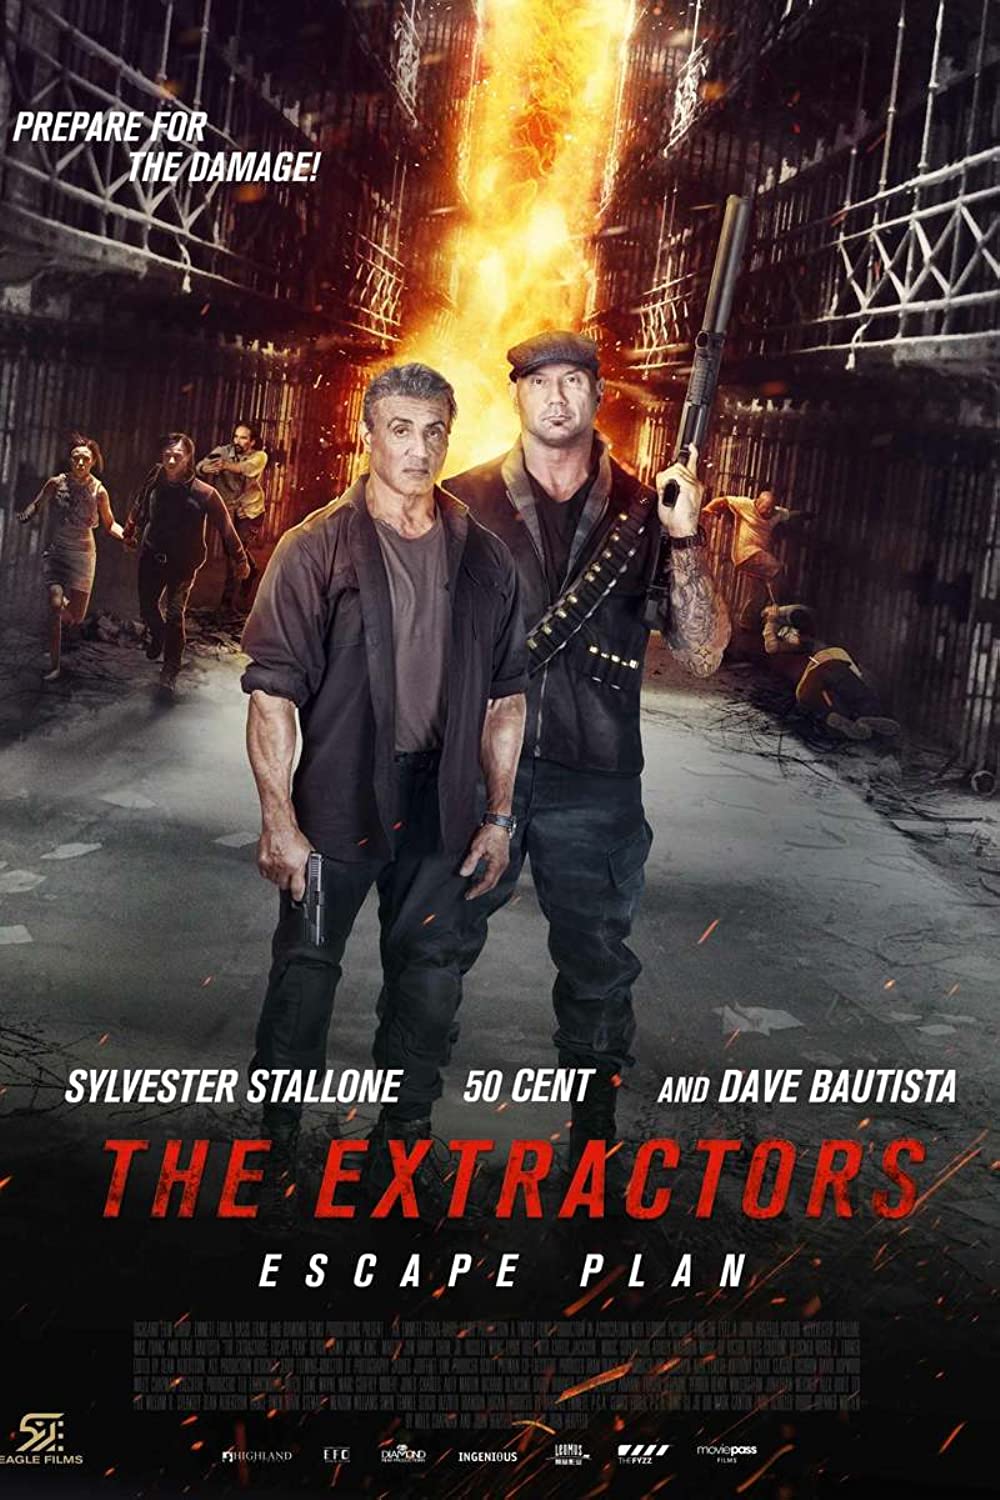 Filmbeschreibung zu Escape Plan 3: The Extractors